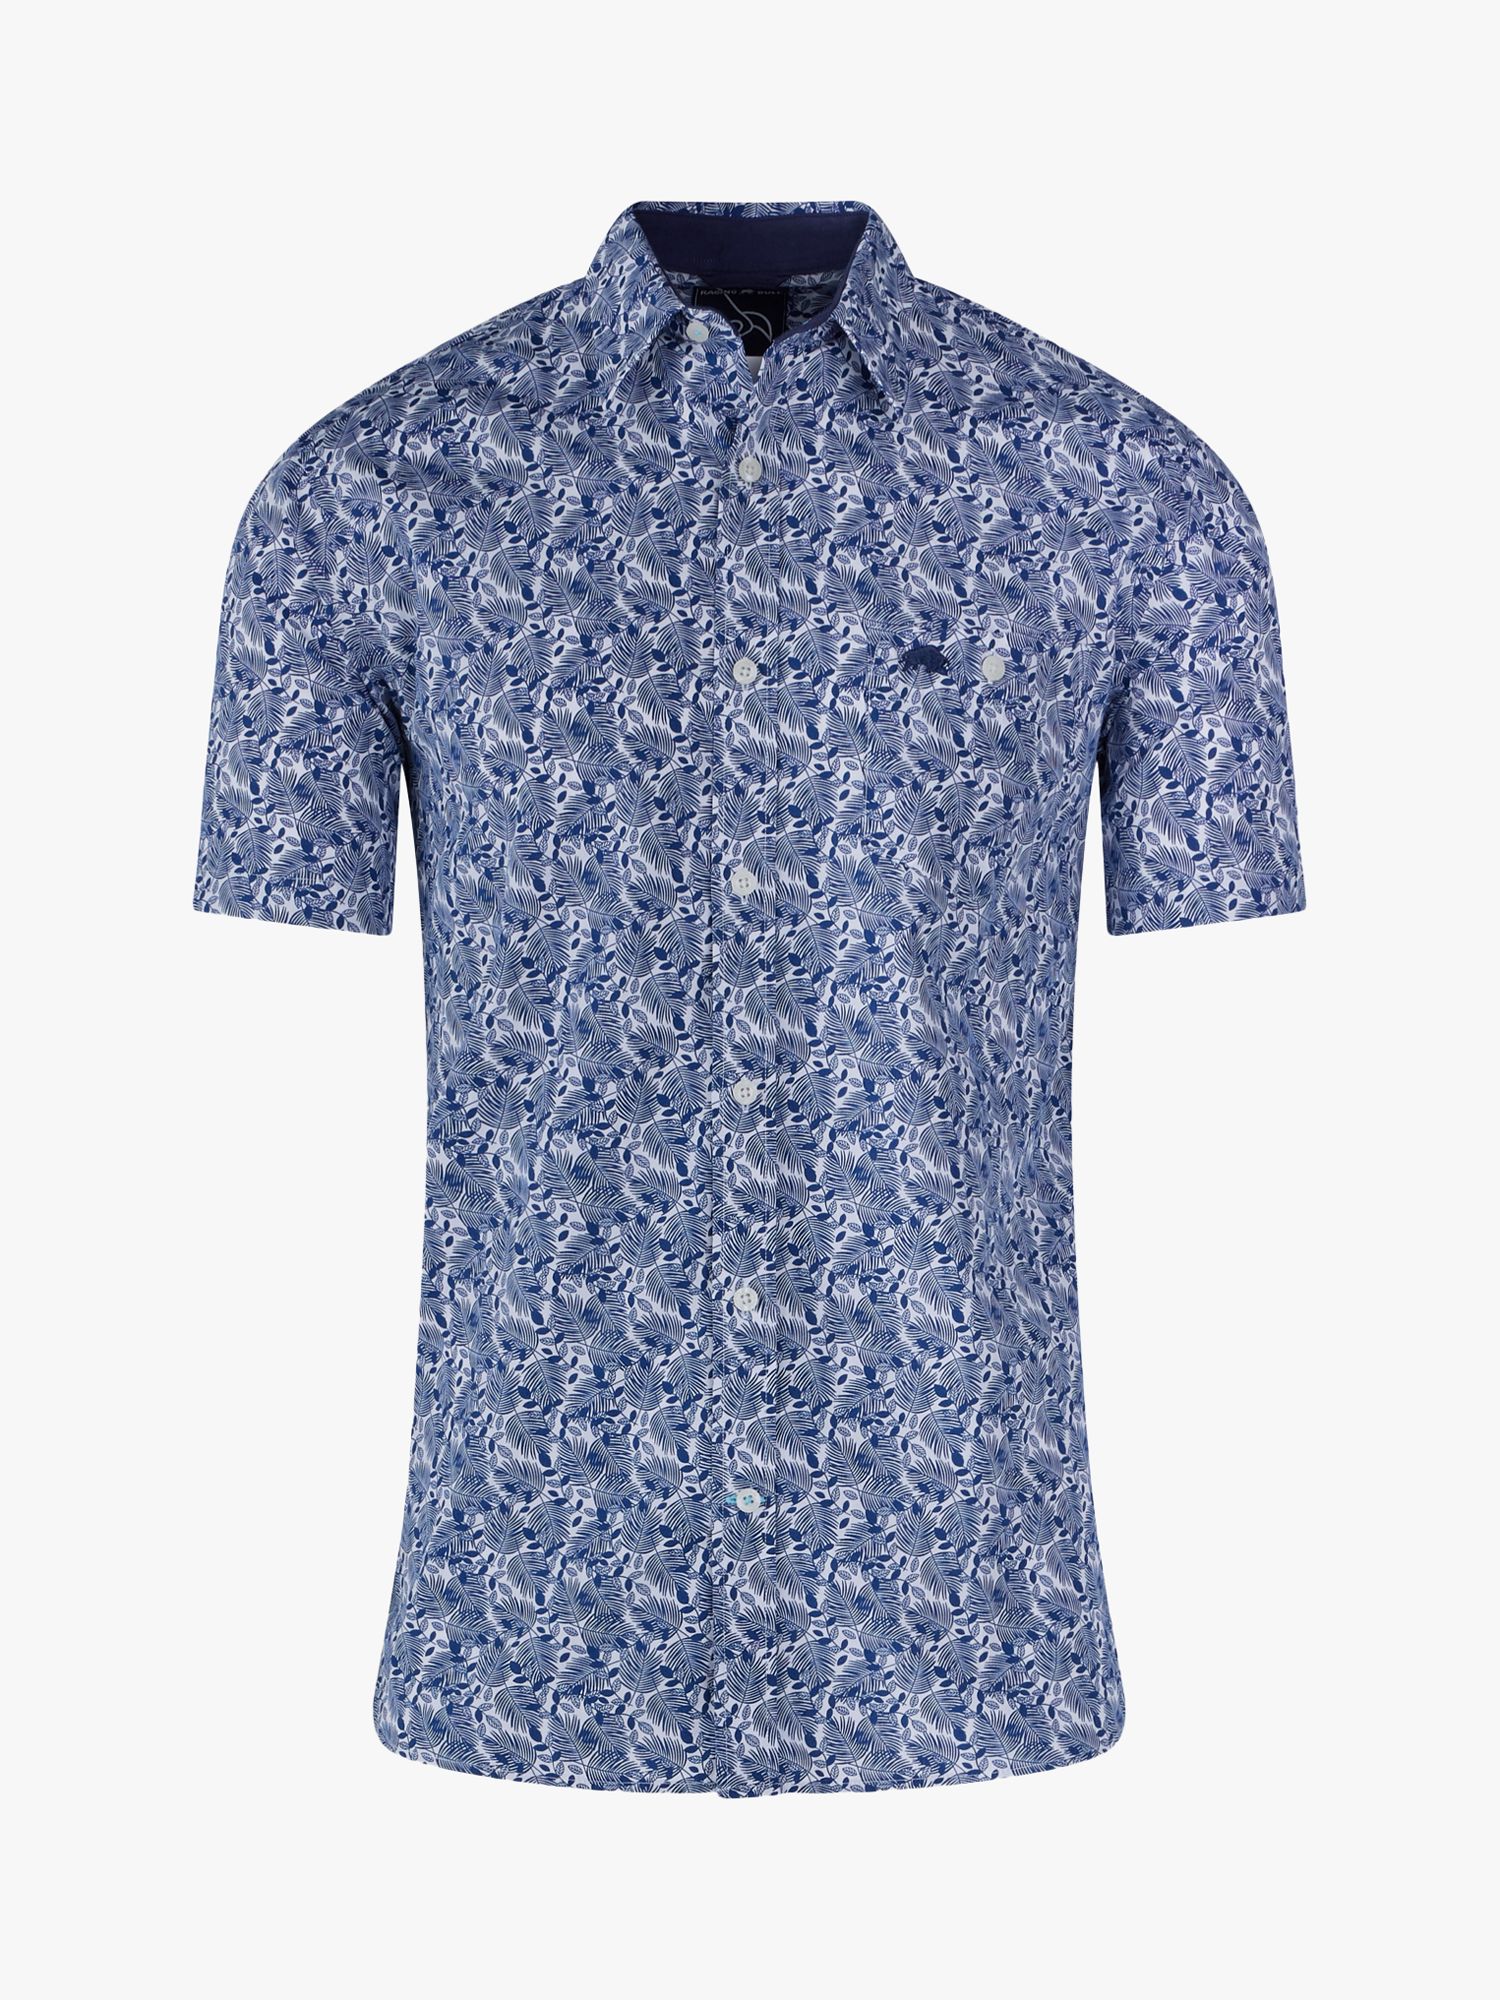 Raging Bull Short Sleeve Leaf Print Poplin Shirt, Blue/White, XXL